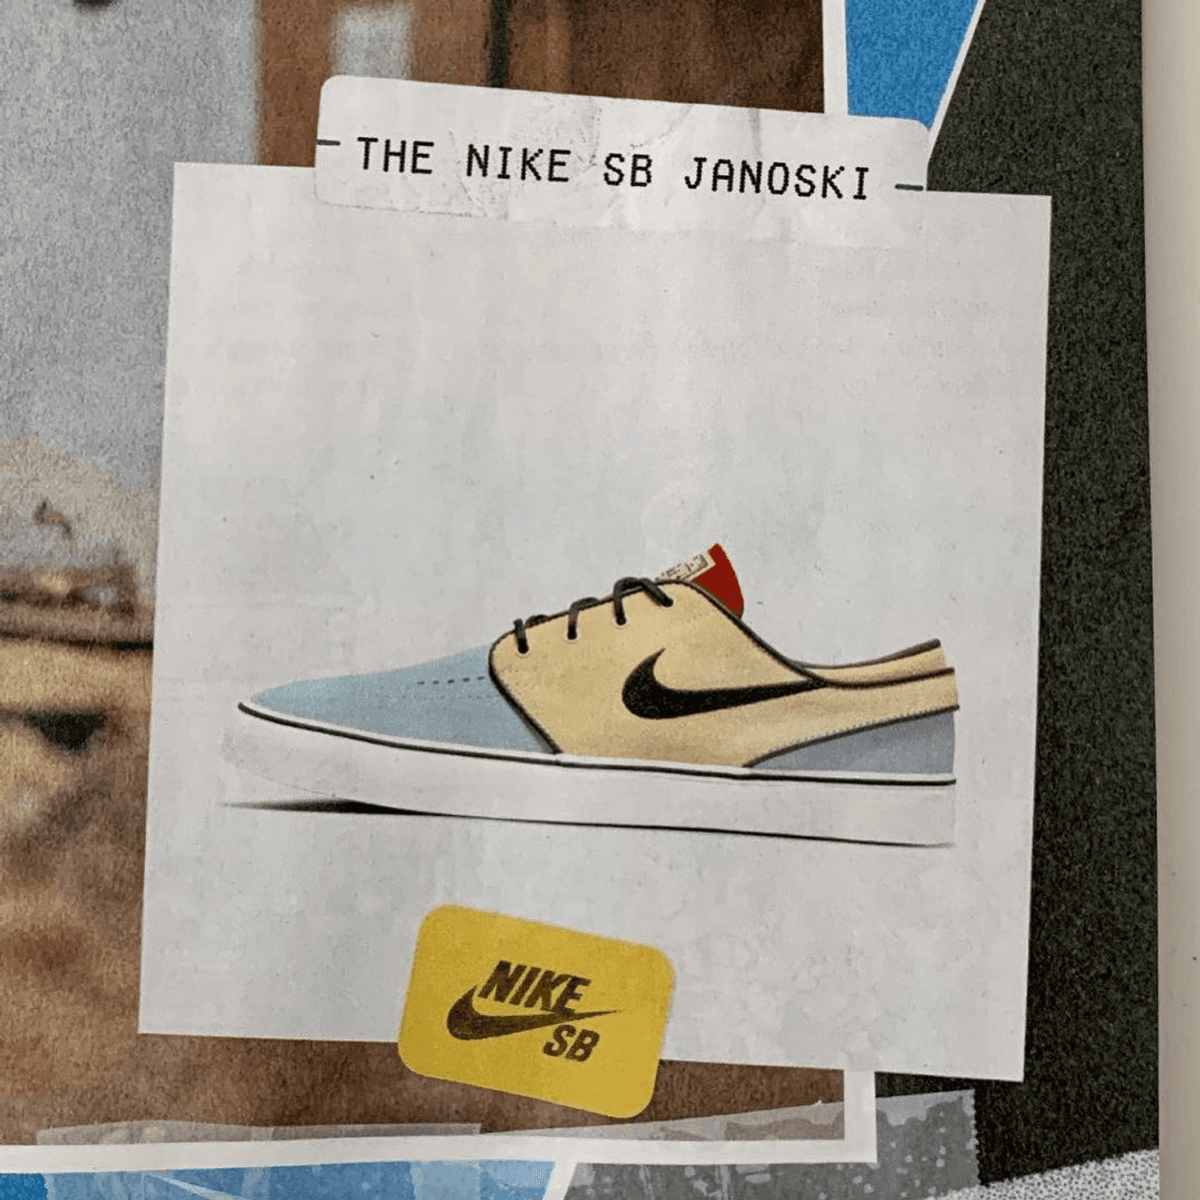 The Original Nike SB Stefan Janoski Is Scheduled To Return